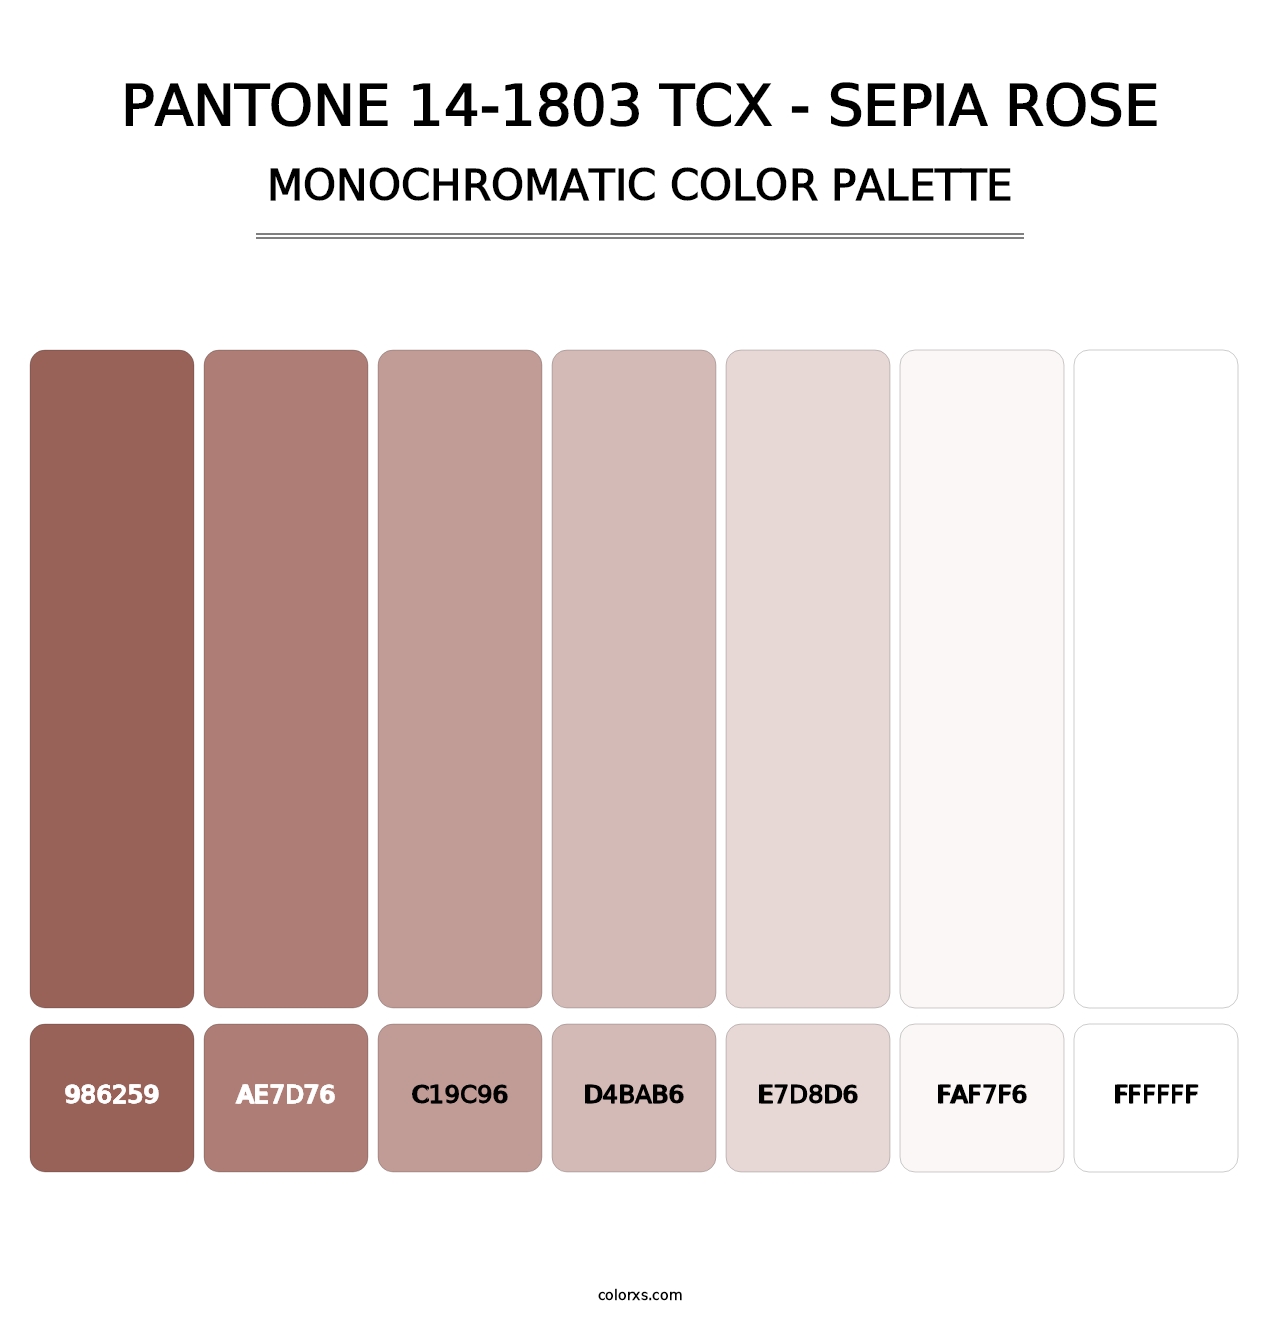 PANTONE 14-1803 TCX - Sepia Rose - Monochromatic Color Palette